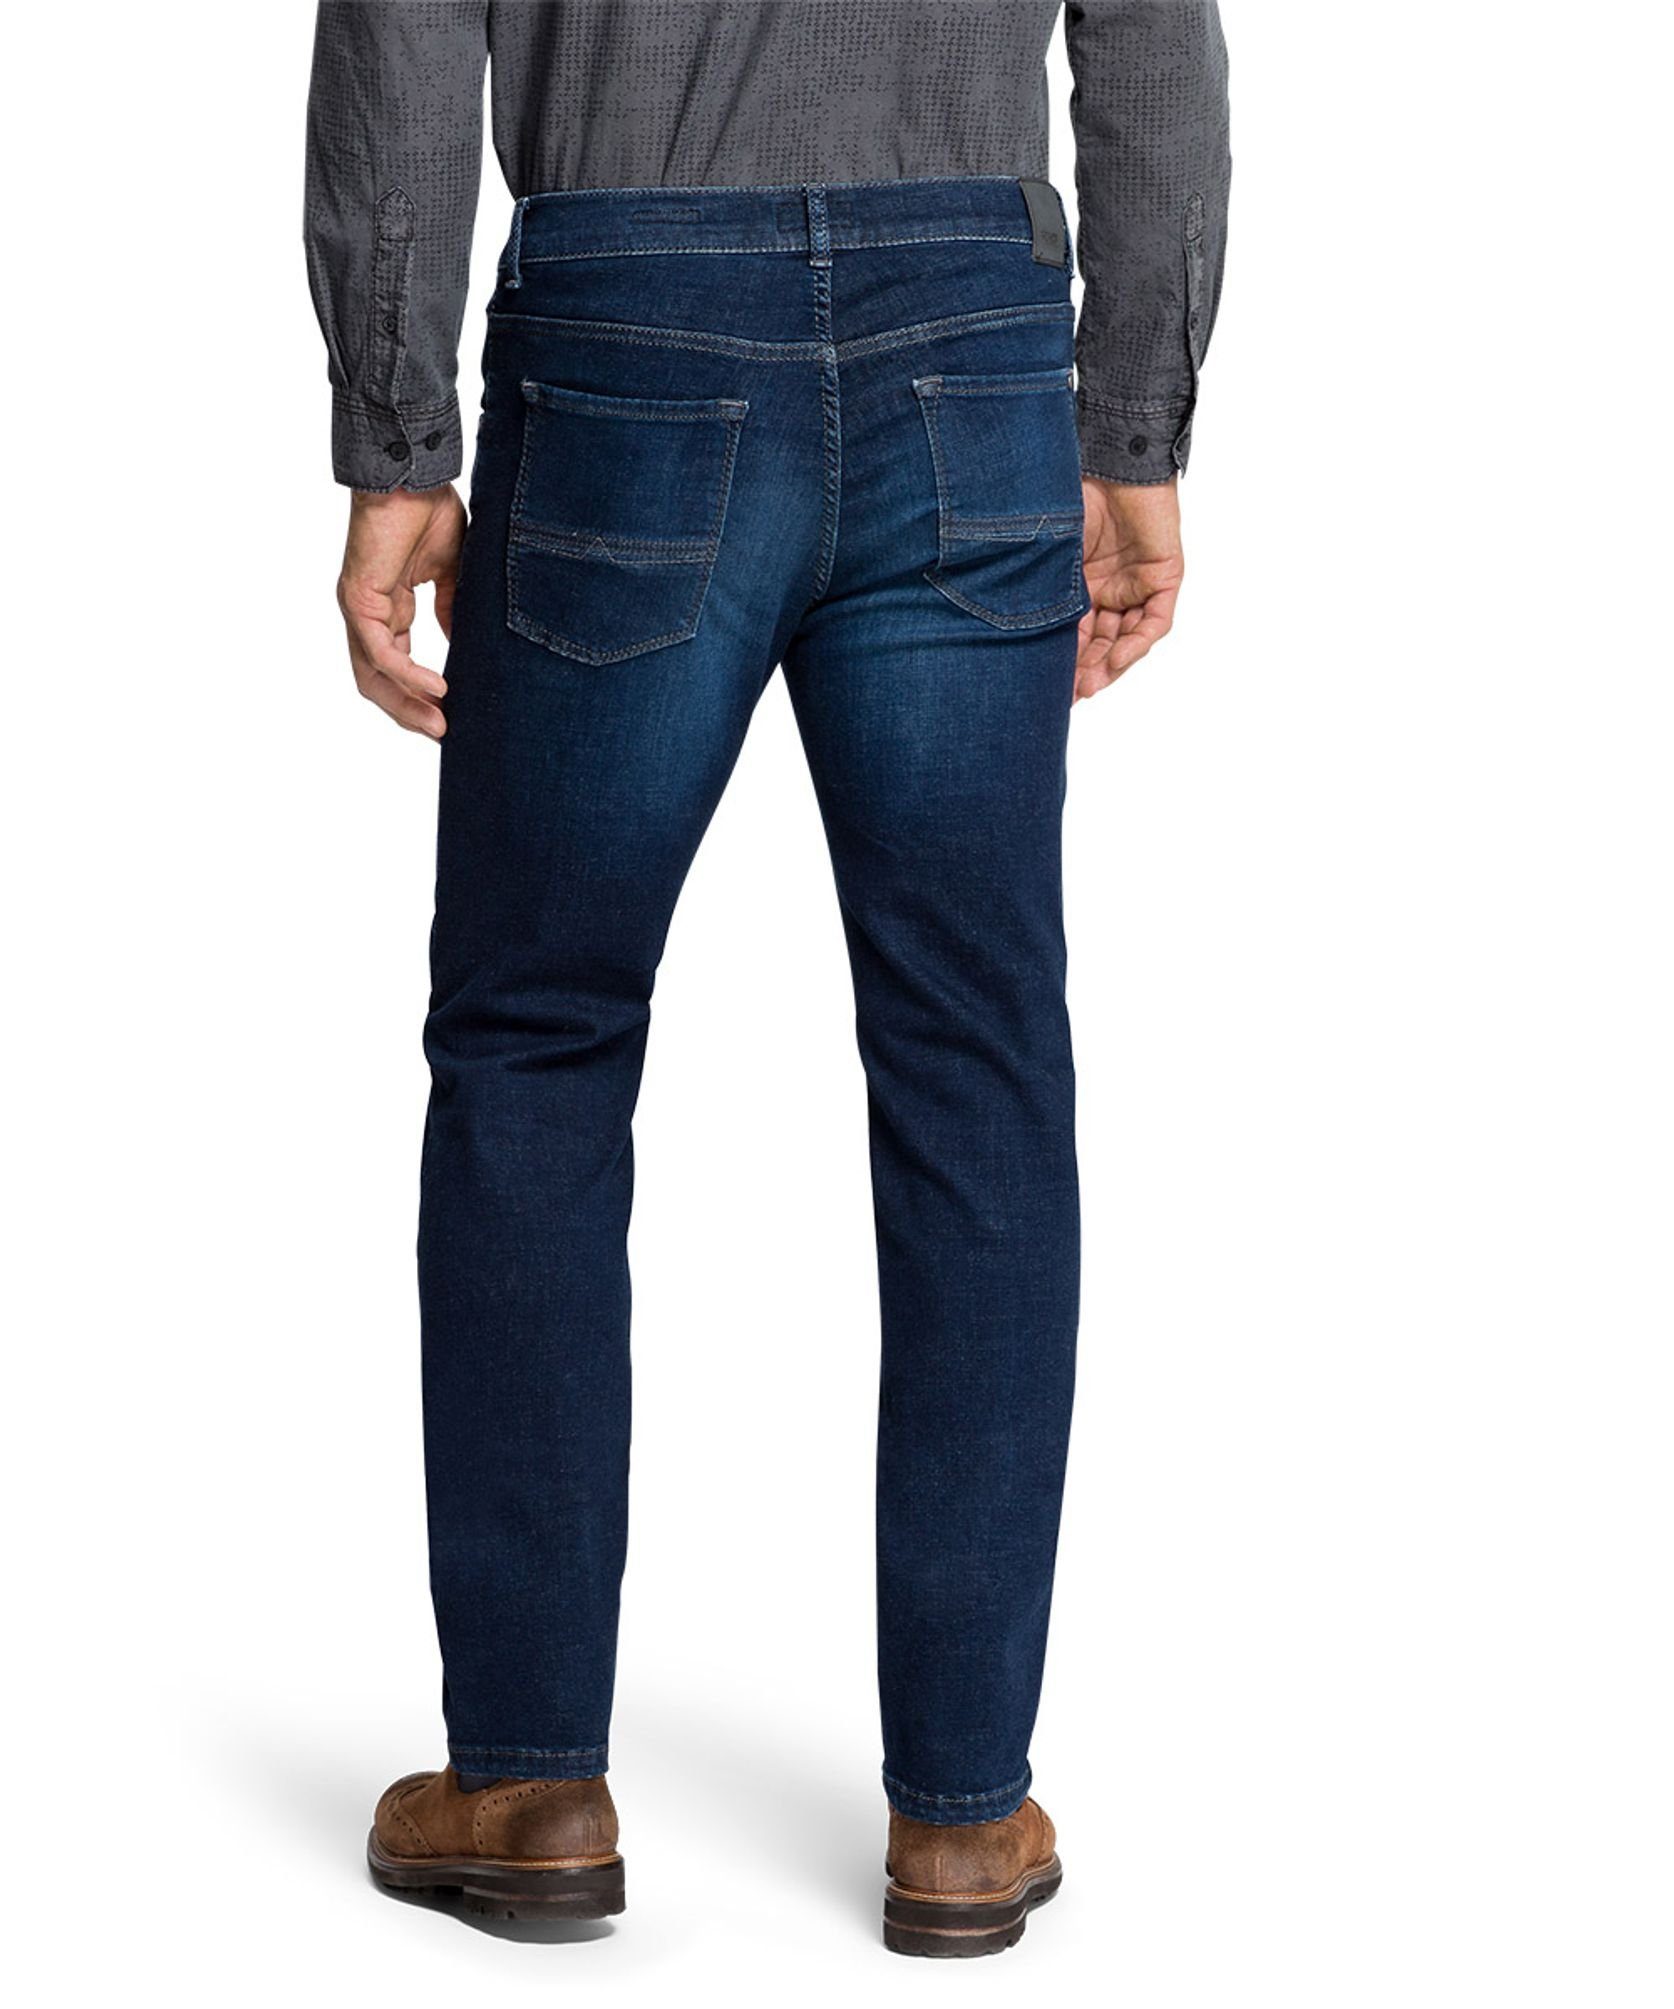 Pioneer Authentic Jeans 16741.6509 5-Pocket-Jeans PO unbekannt hohe Elastizität